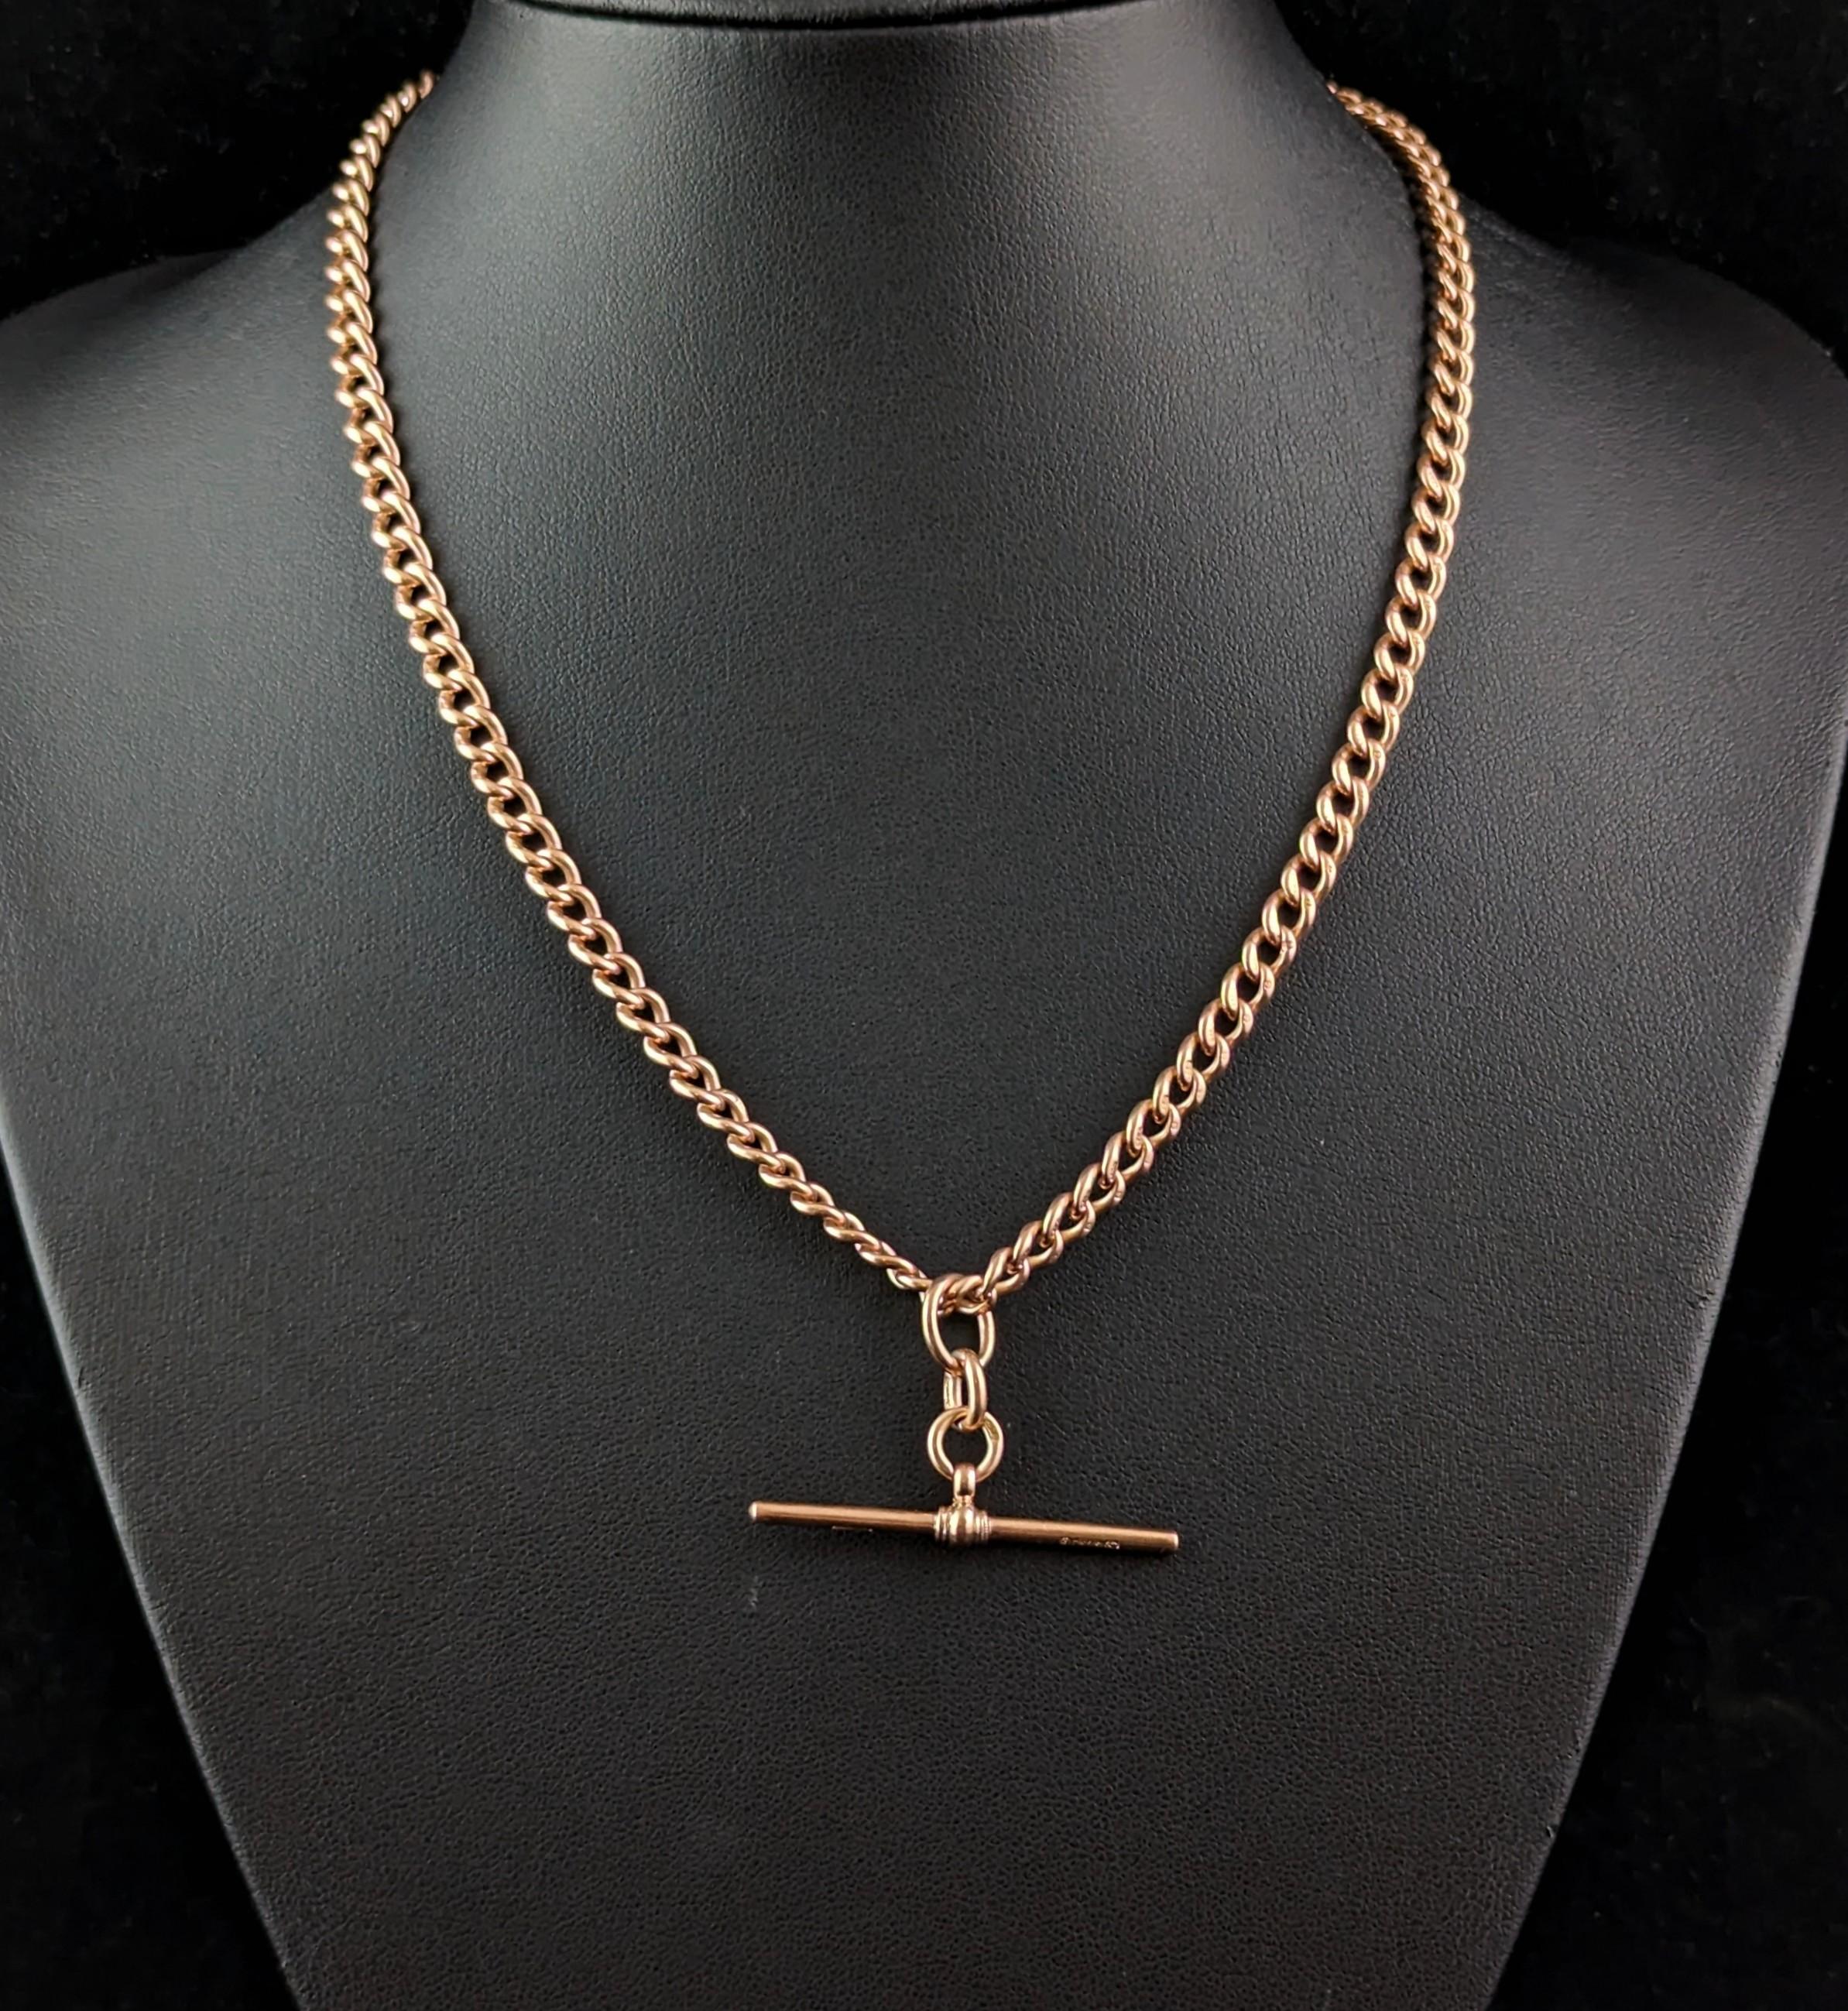 Antique 9k rose gold Albert chain, watch chain necklace, Art Deco  7